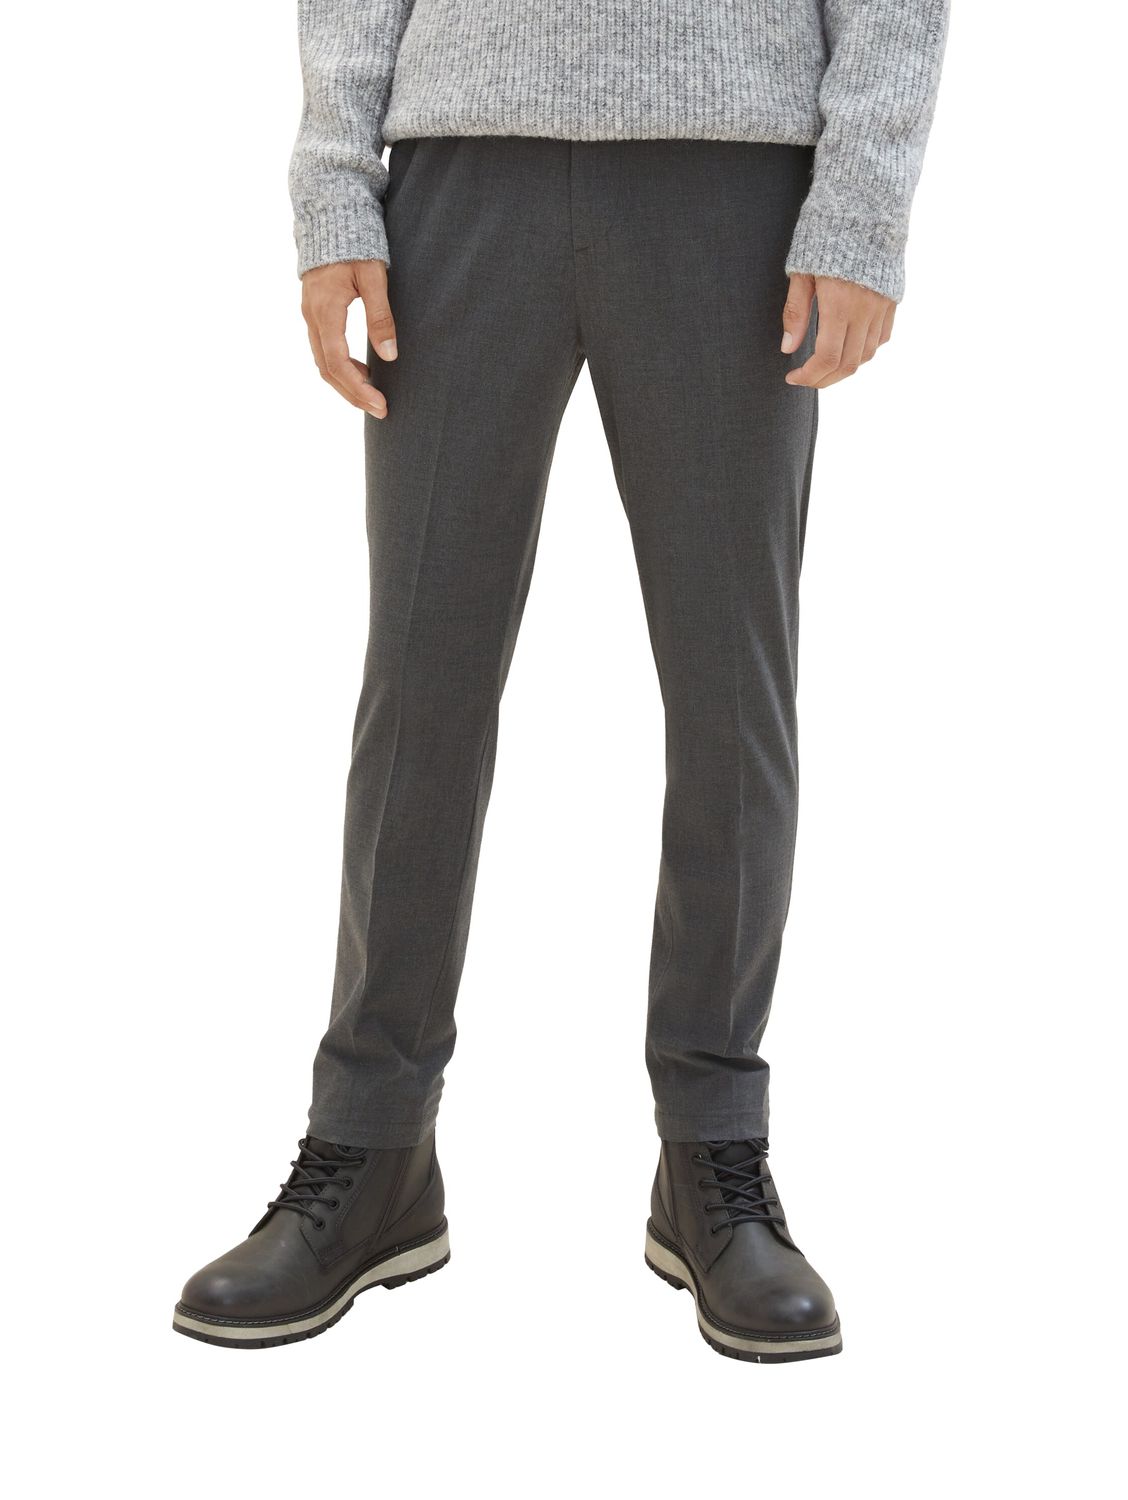 Тканевые брюки TOM TAILOR Denim Stoff/Chino RELAXED TAPERED CHINO comfort/relaxed, серый худи tom tailor размер xl серый